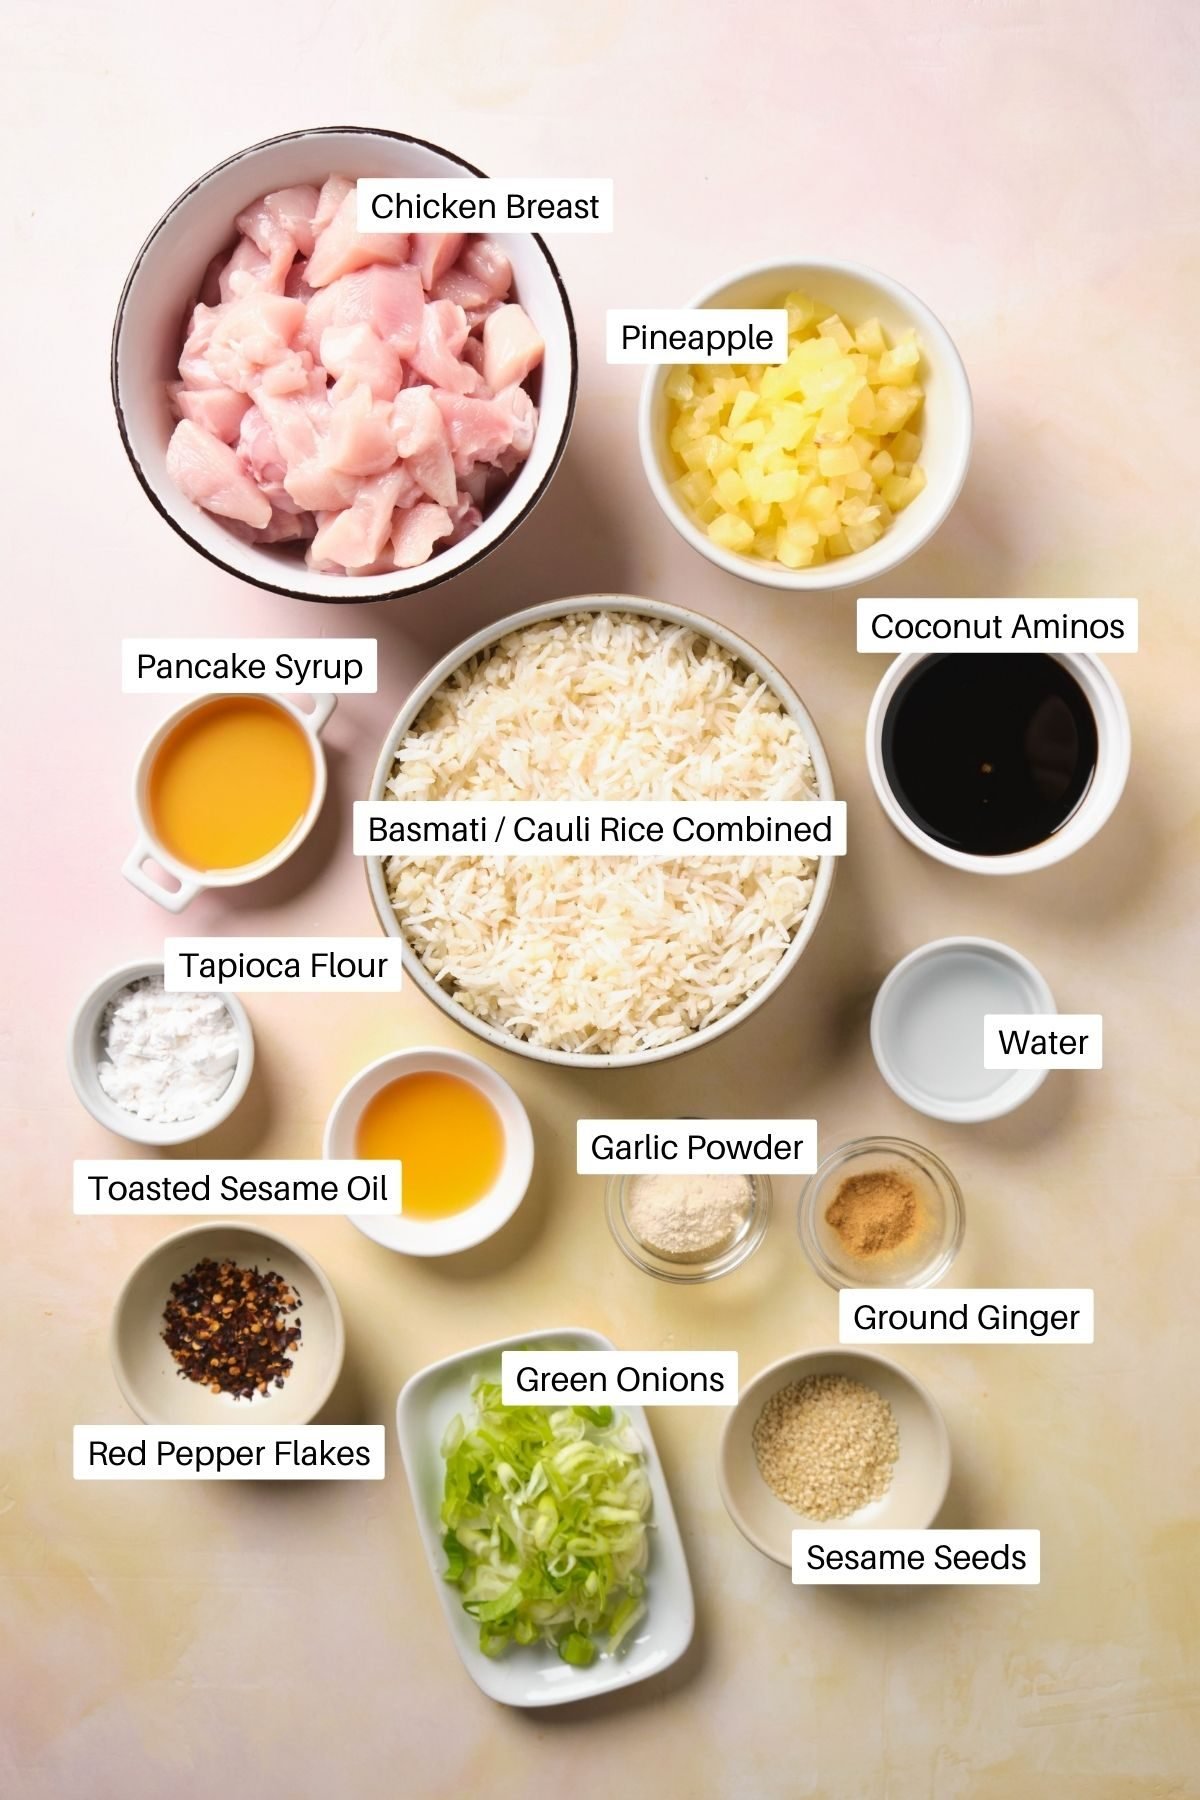 Teriyaki bowl ingredients including pancake syrup, tapioca flour, and ground ginger.